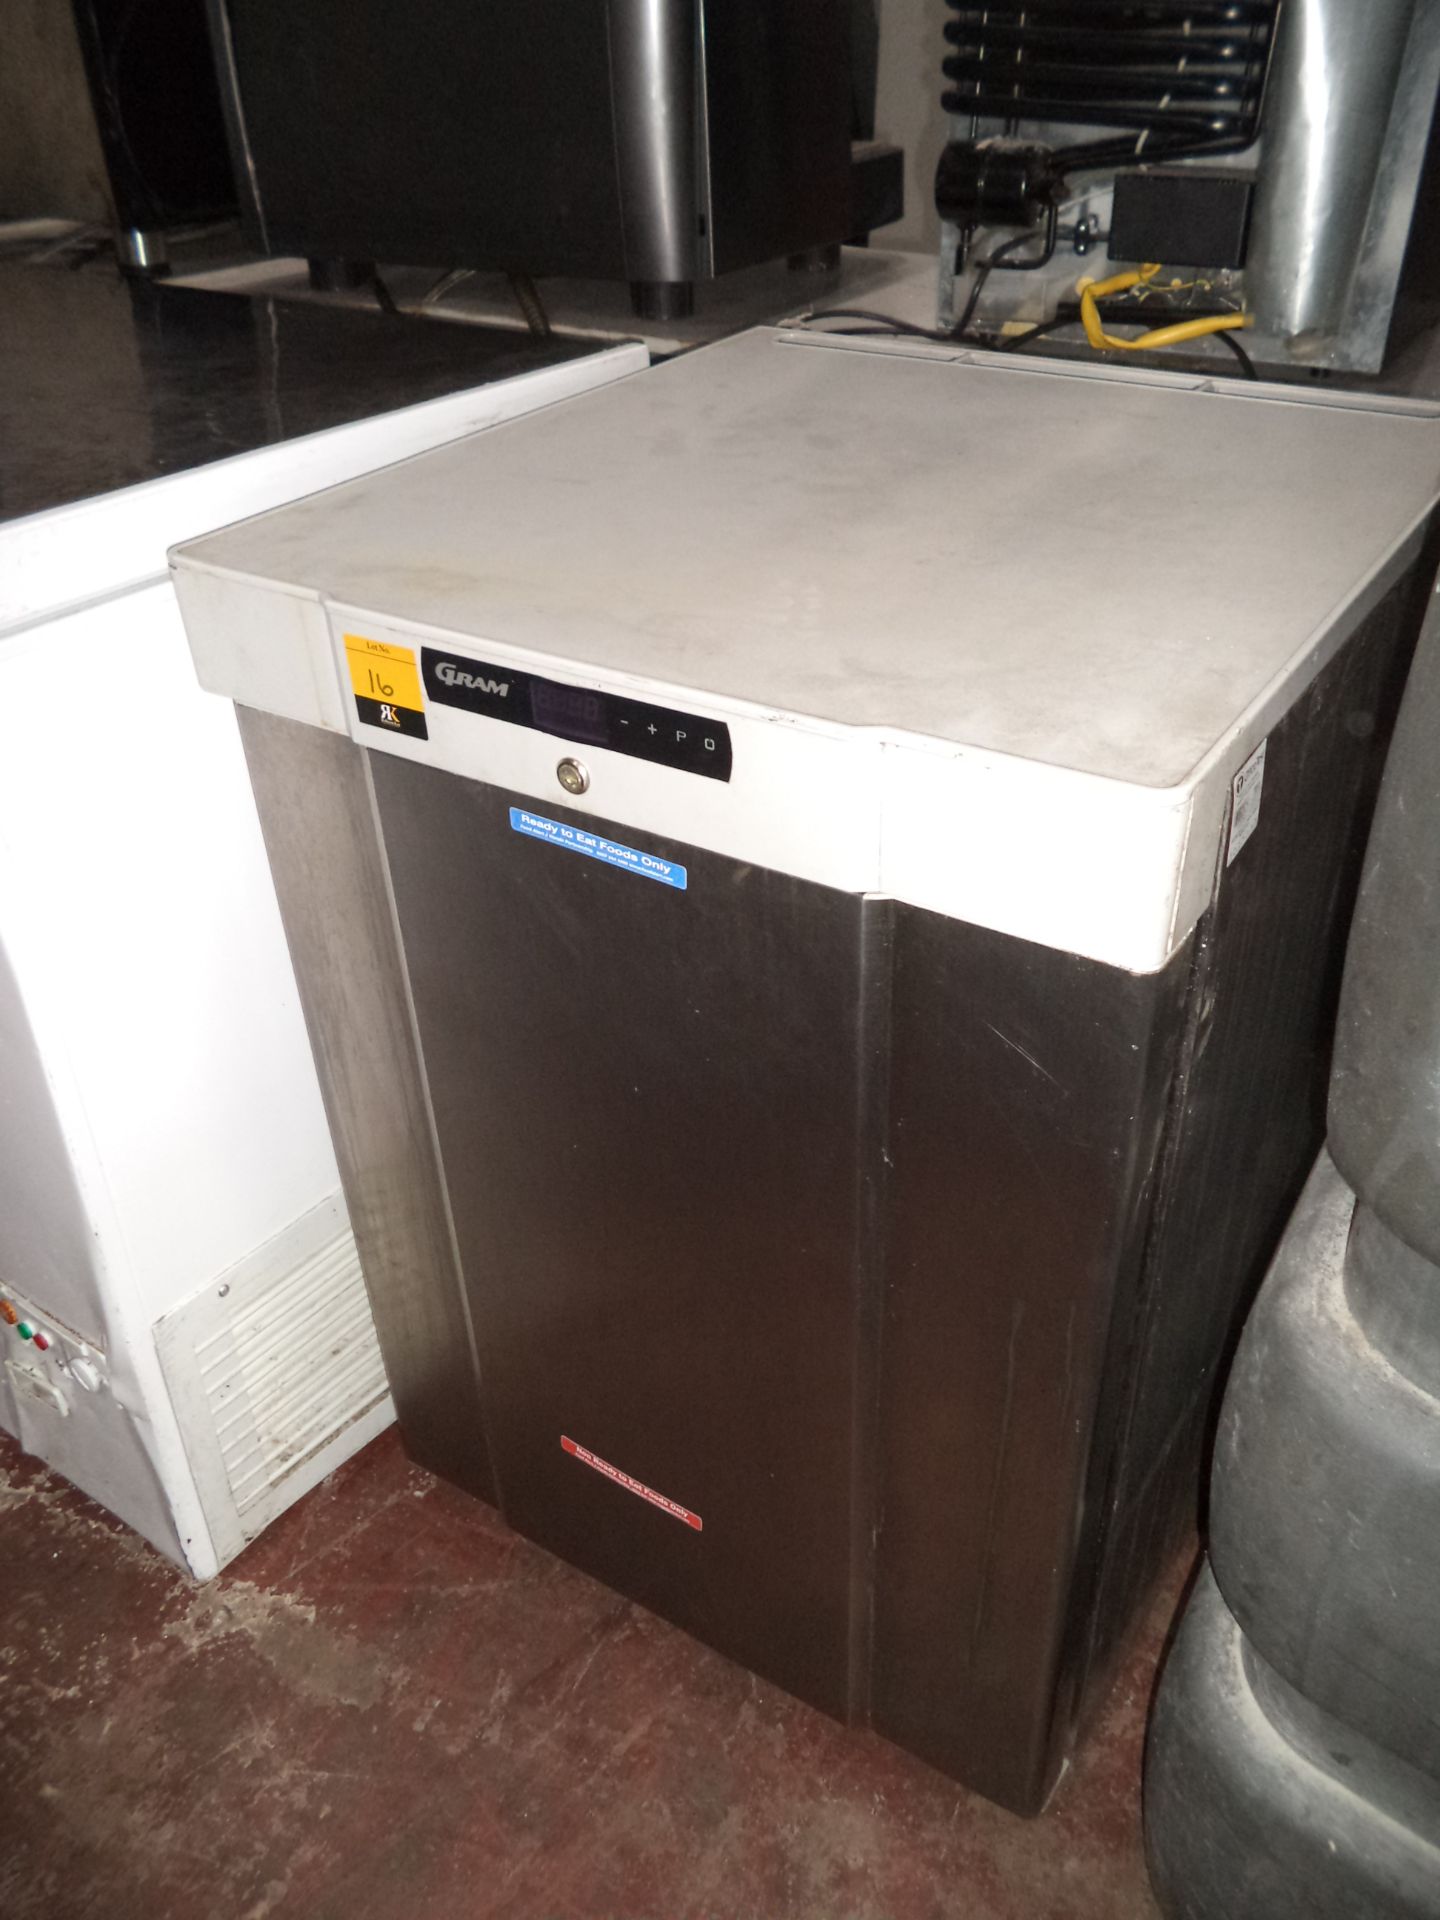 Gram stainless steel counter height fridge, model K210 IMPORTANT: Please remember goods successfully